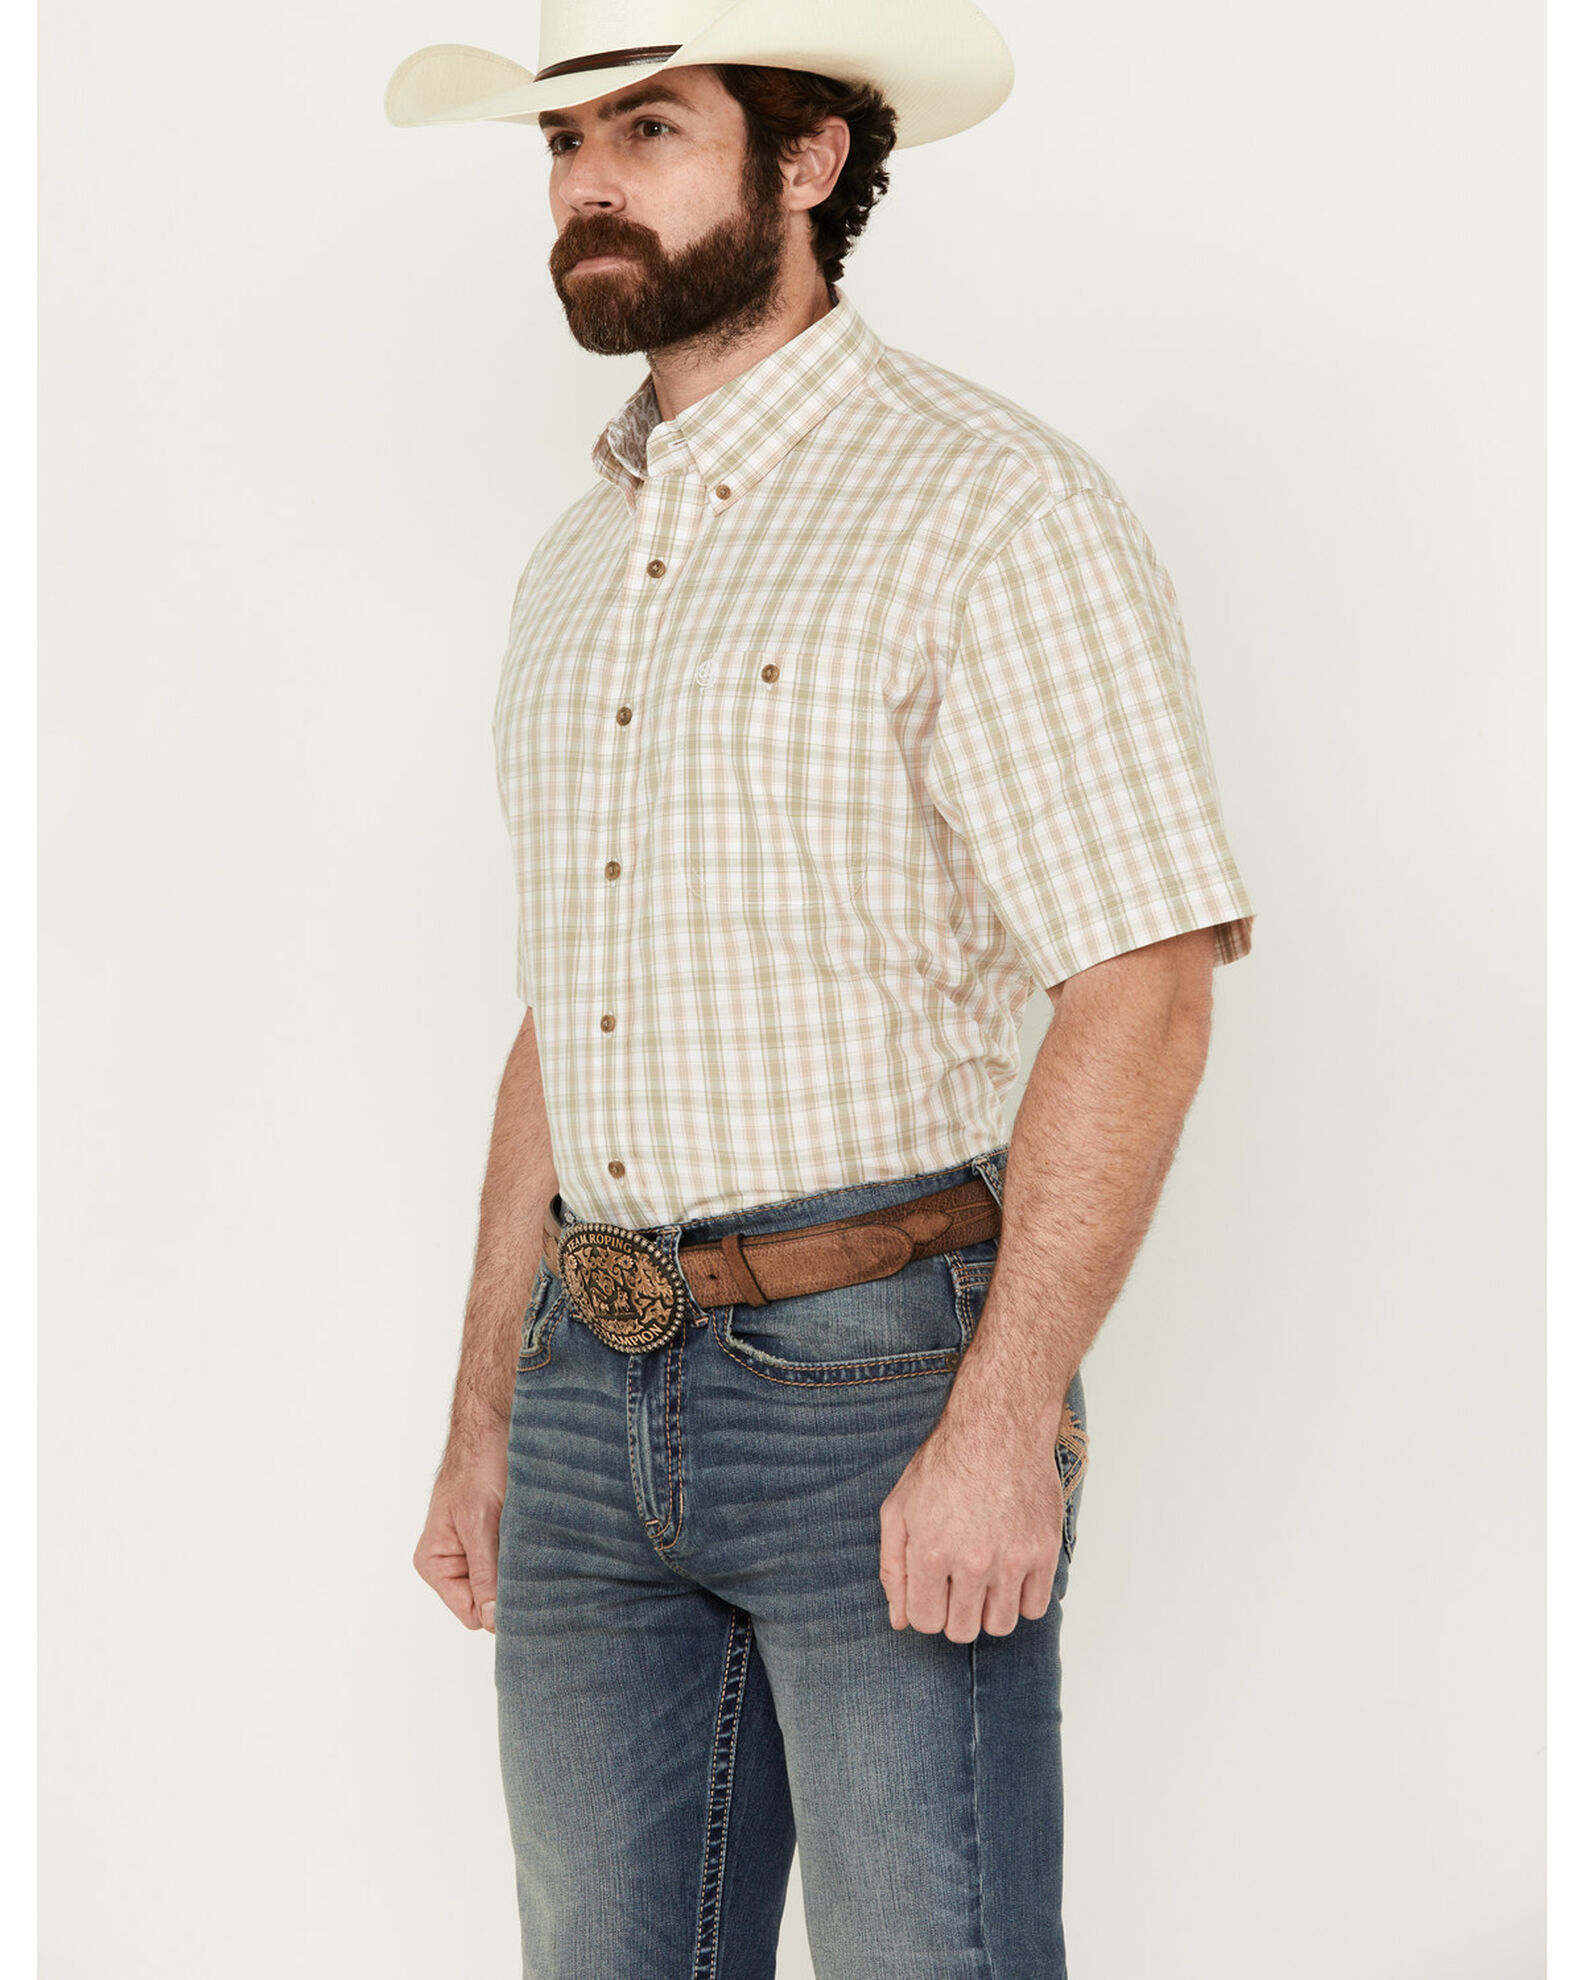 Product Name: George Strait by Wrangler Men's Plaid Print Short Sleeve ...